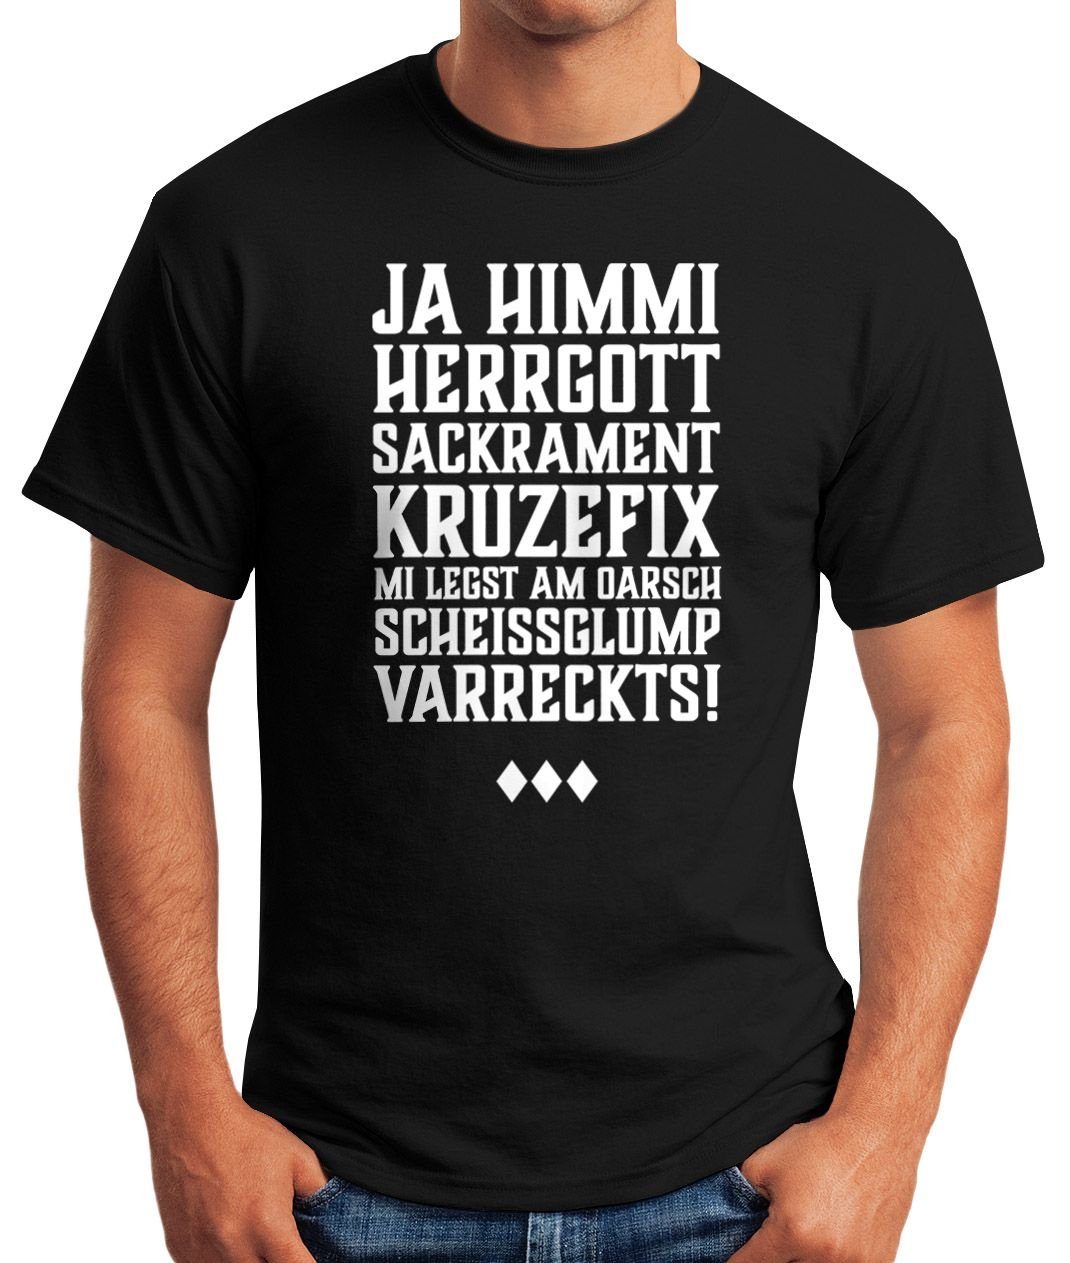 mit MoonWorks Moonworks® T-Shirt Fun-Shirt Print-Shirt Himmi Print Herrgott Sakrament Herren